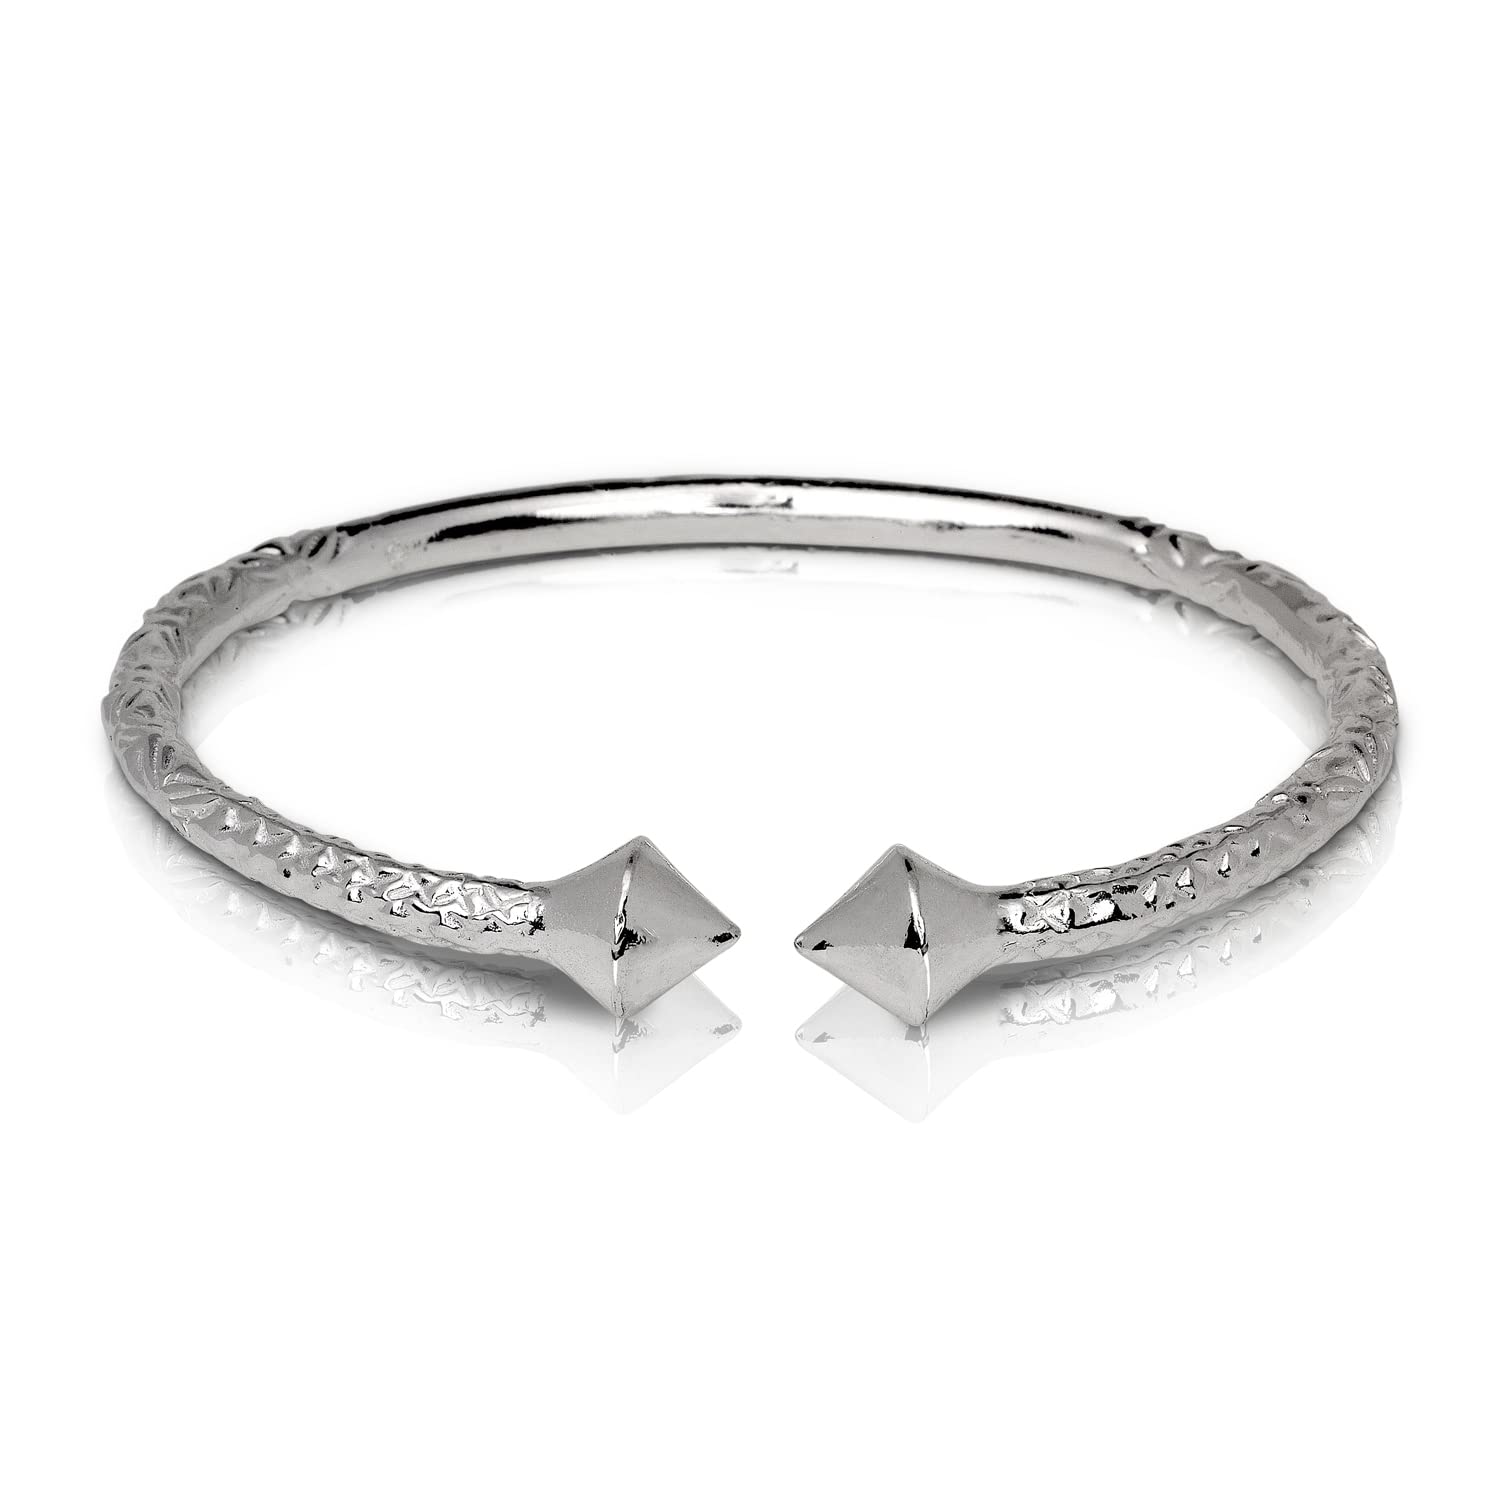 Sterling Silver Link Bracelets - Custom Made in USA by TriJewels